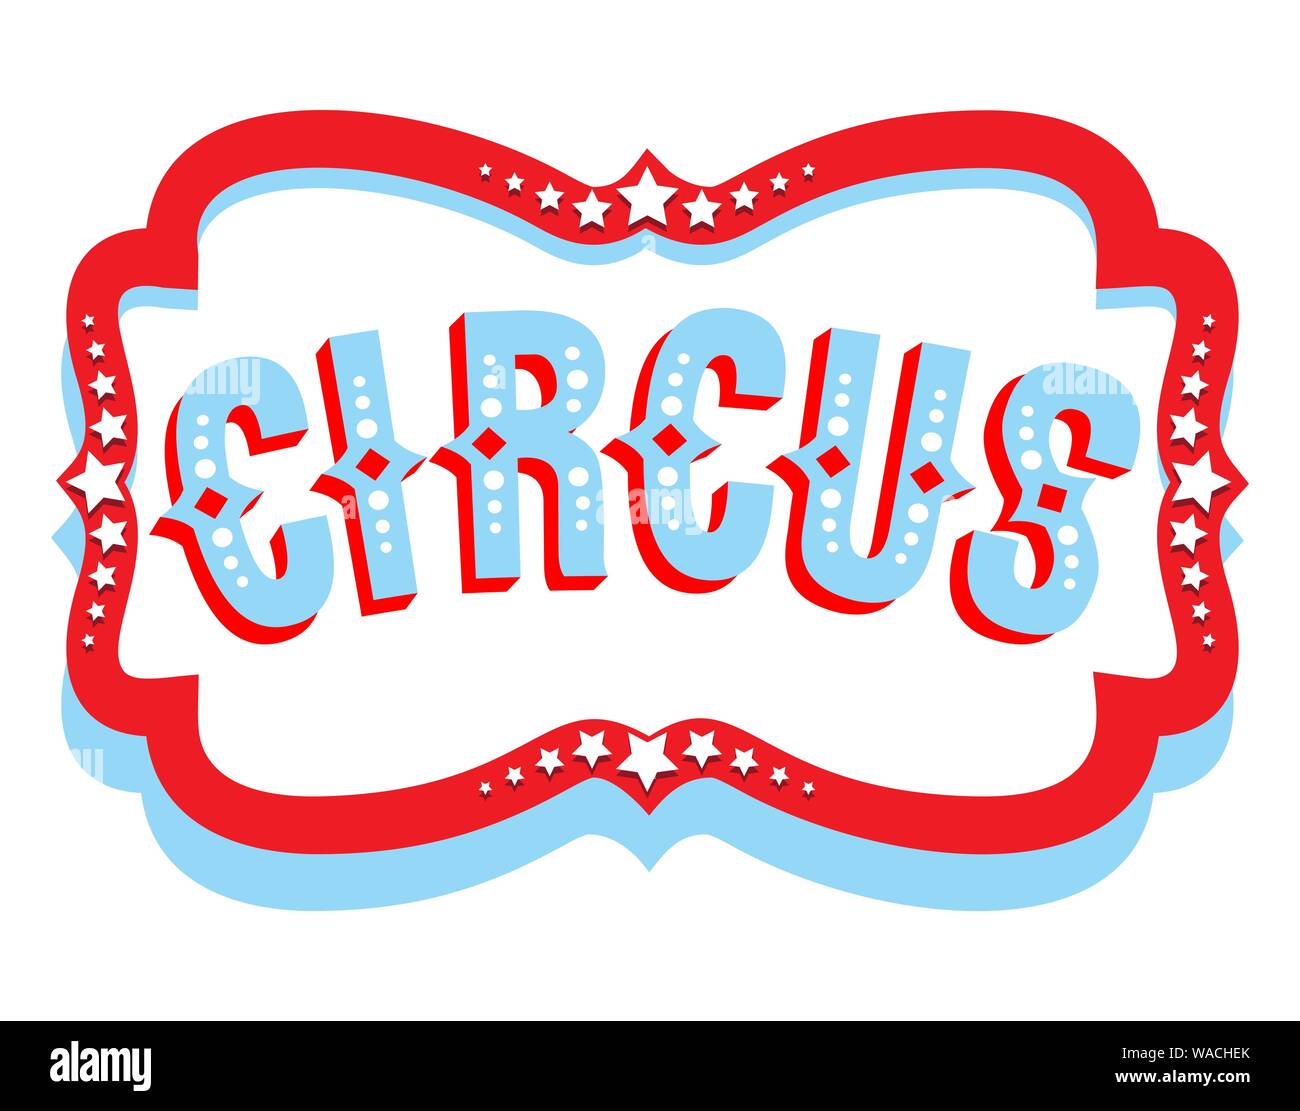 Circus banner sign. Stock Vector